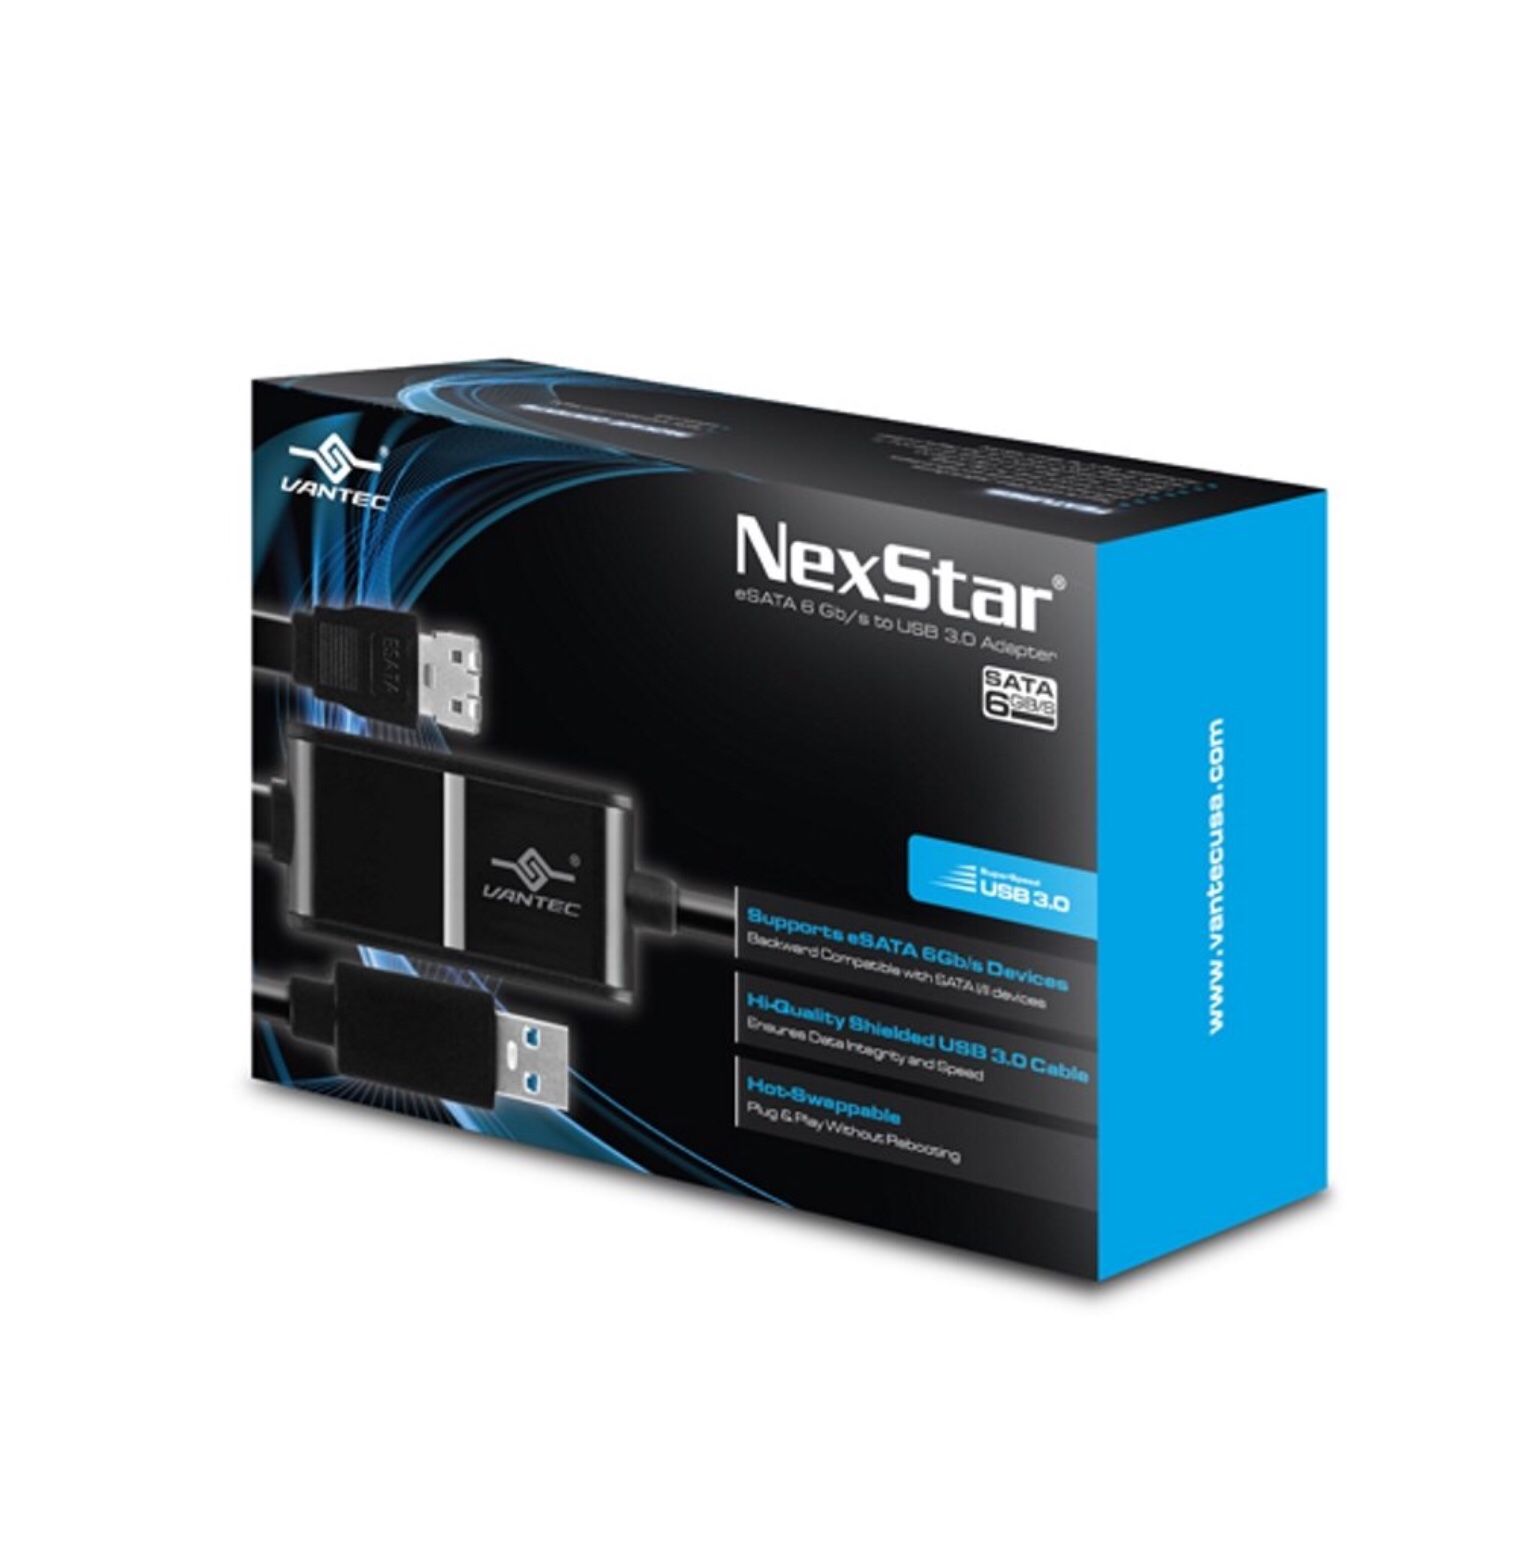 Nexstar SATA 6GB To USB 3.0 Adapter